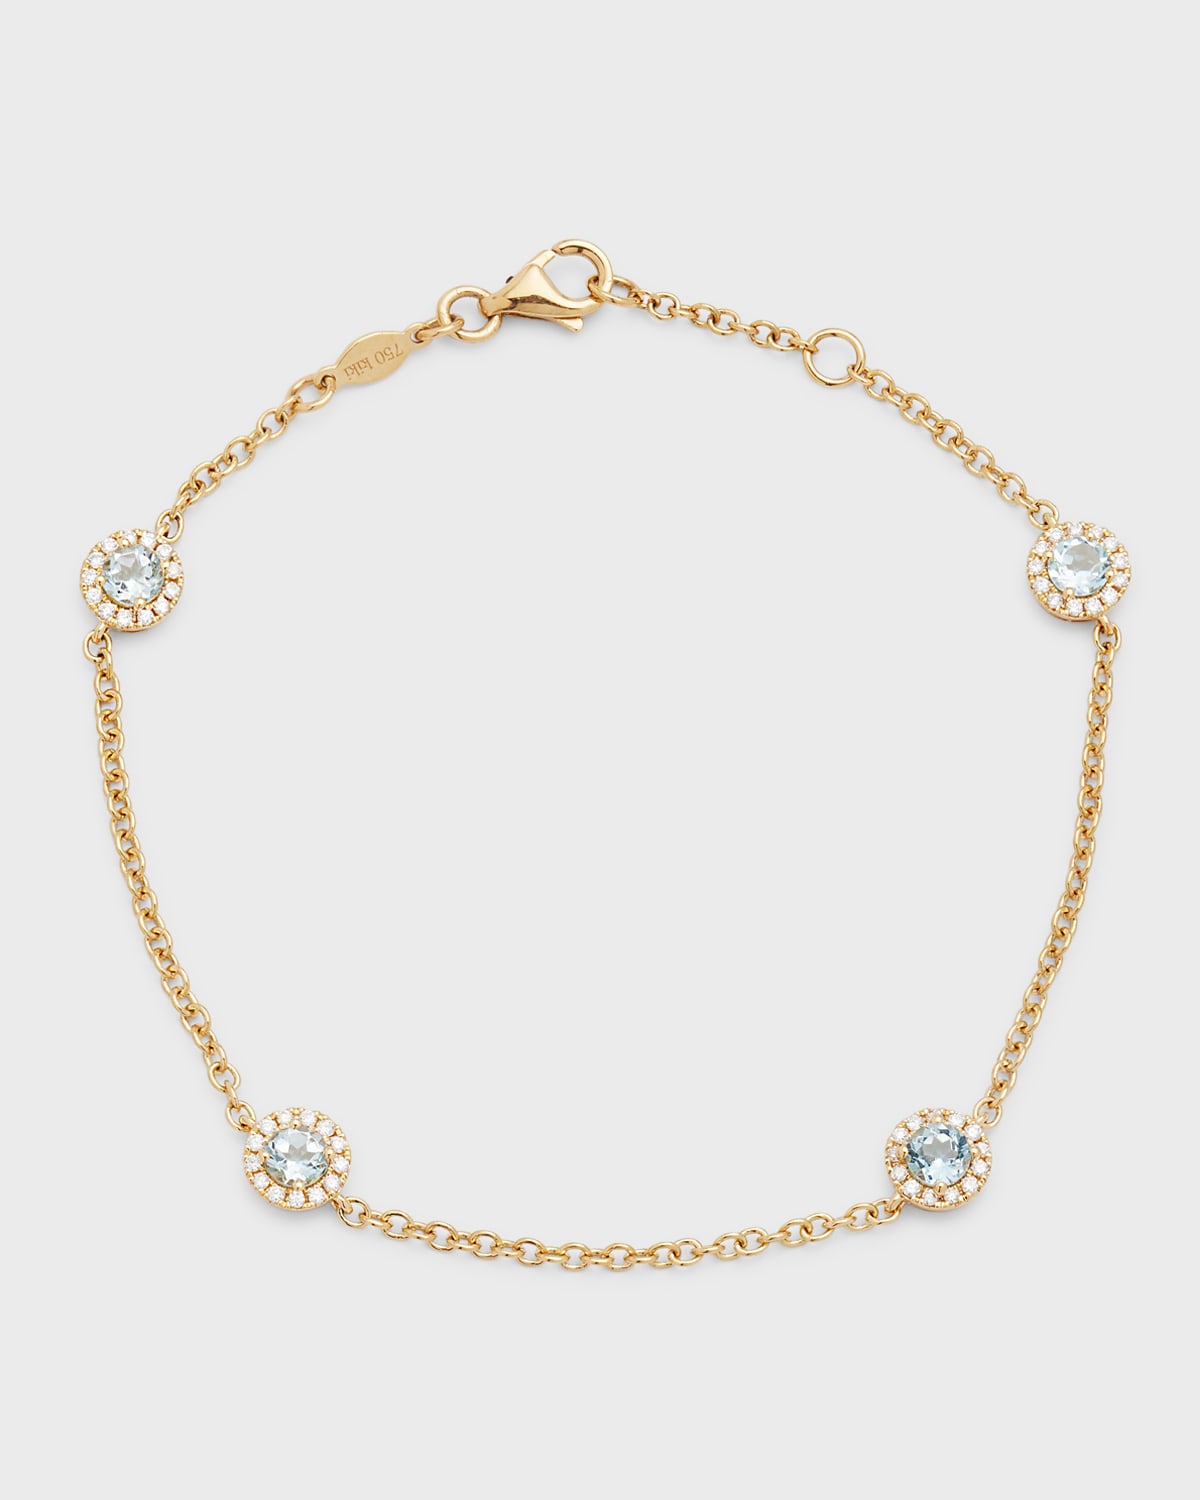 Kiki McDonough Grace 18K Yellow Gold Chain Bracelet with Green Amethyst and Diamonds